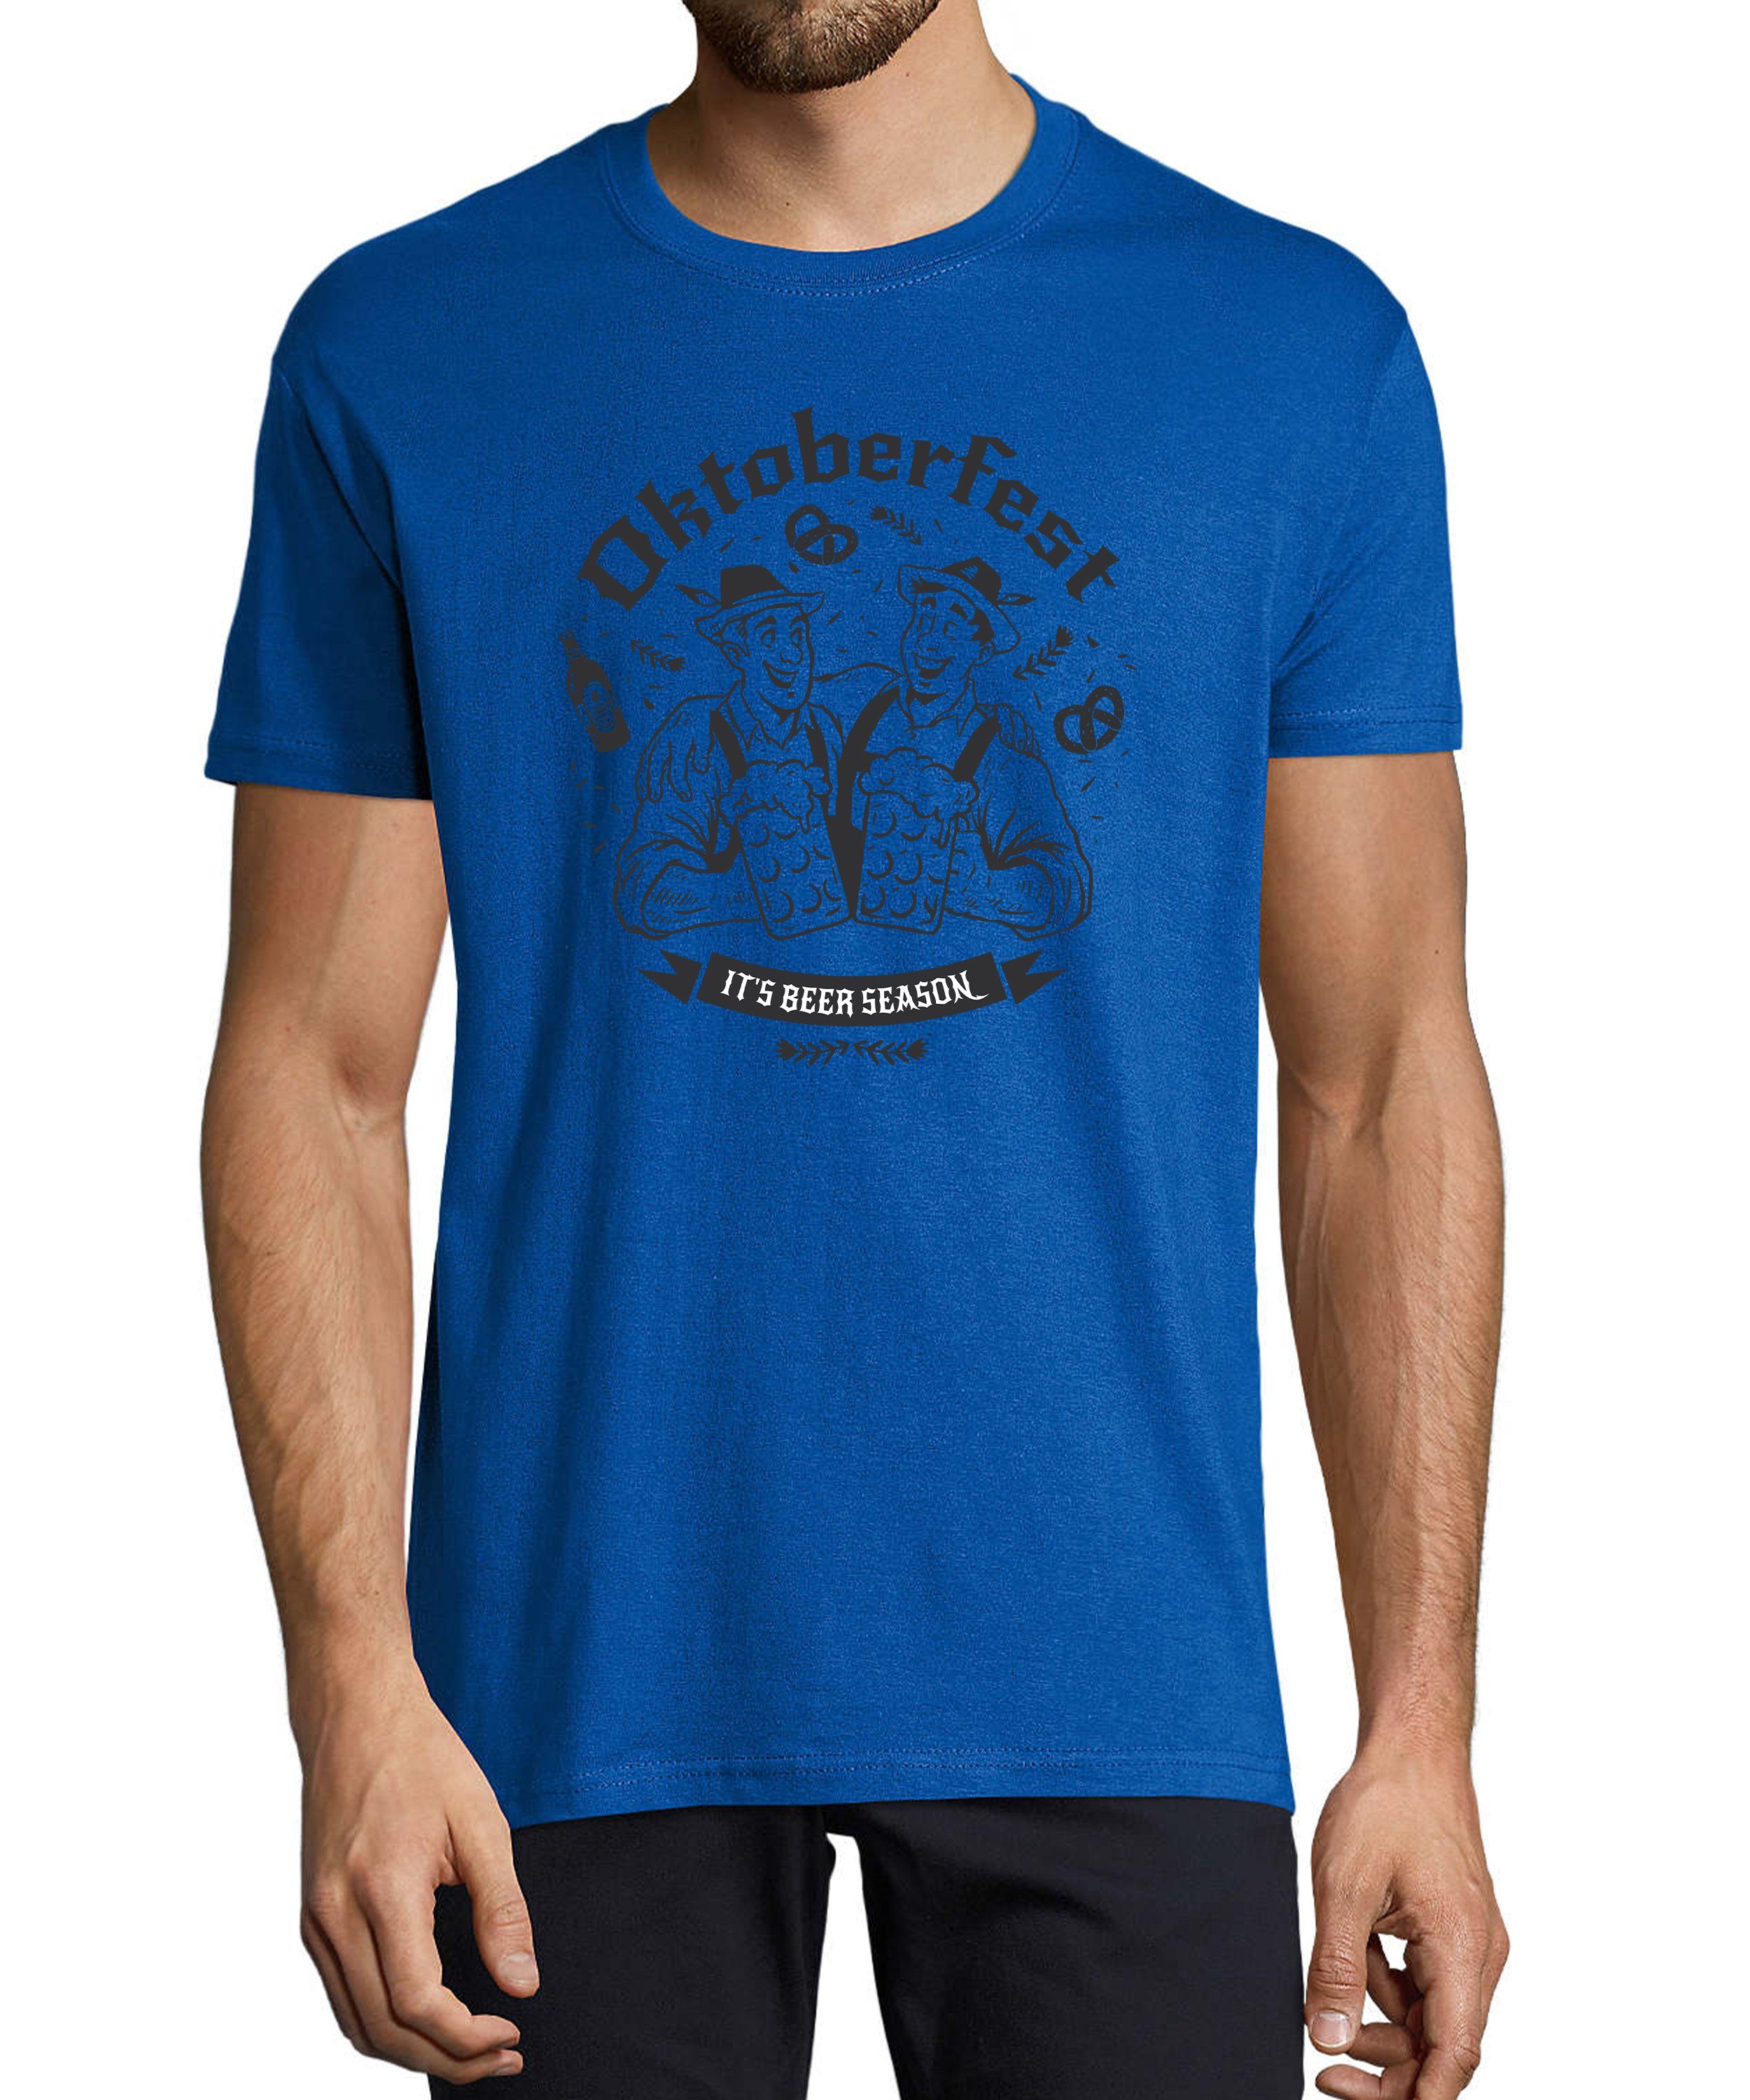 MyDesign24 T-Shirt Herren Fun Shirt - Trinkshirt Oktoberfest T-Shirt It´s Beer Season Baumwollshirt mit Aufdruck Regular Fit, i324 royal blau